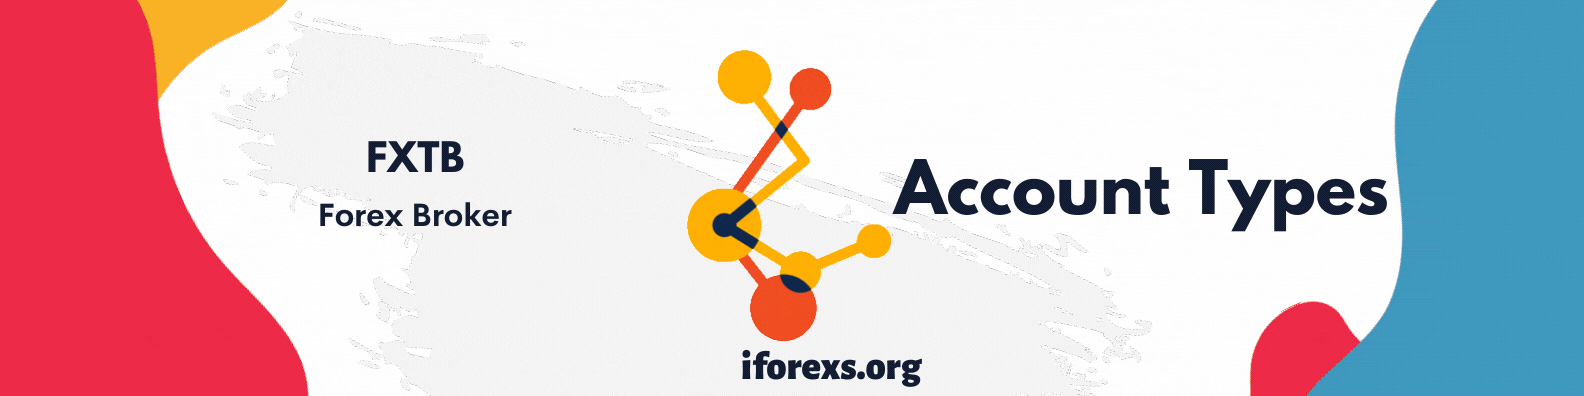 FXTB Venue Account Types